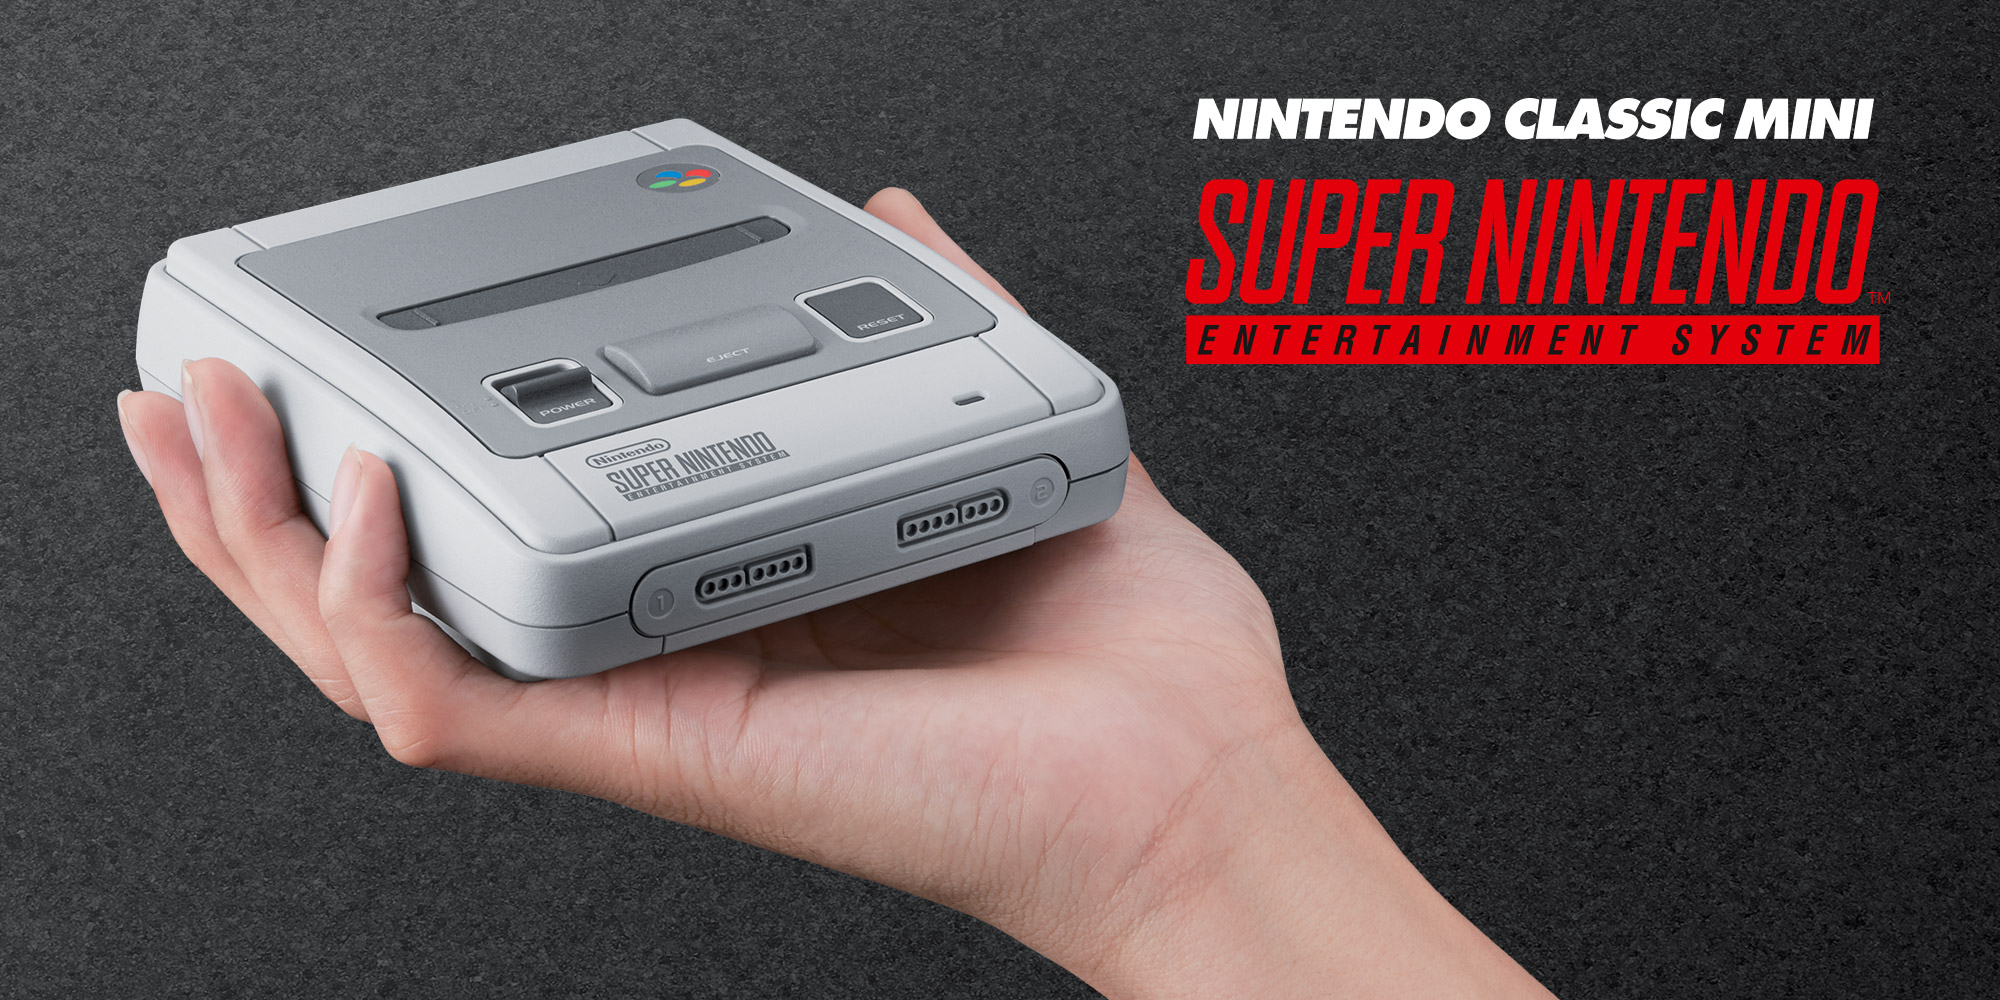 A Nintendo Classic Mini: Super Nintendo Entertainment System chega a Portugal no dia 29 de setembro!